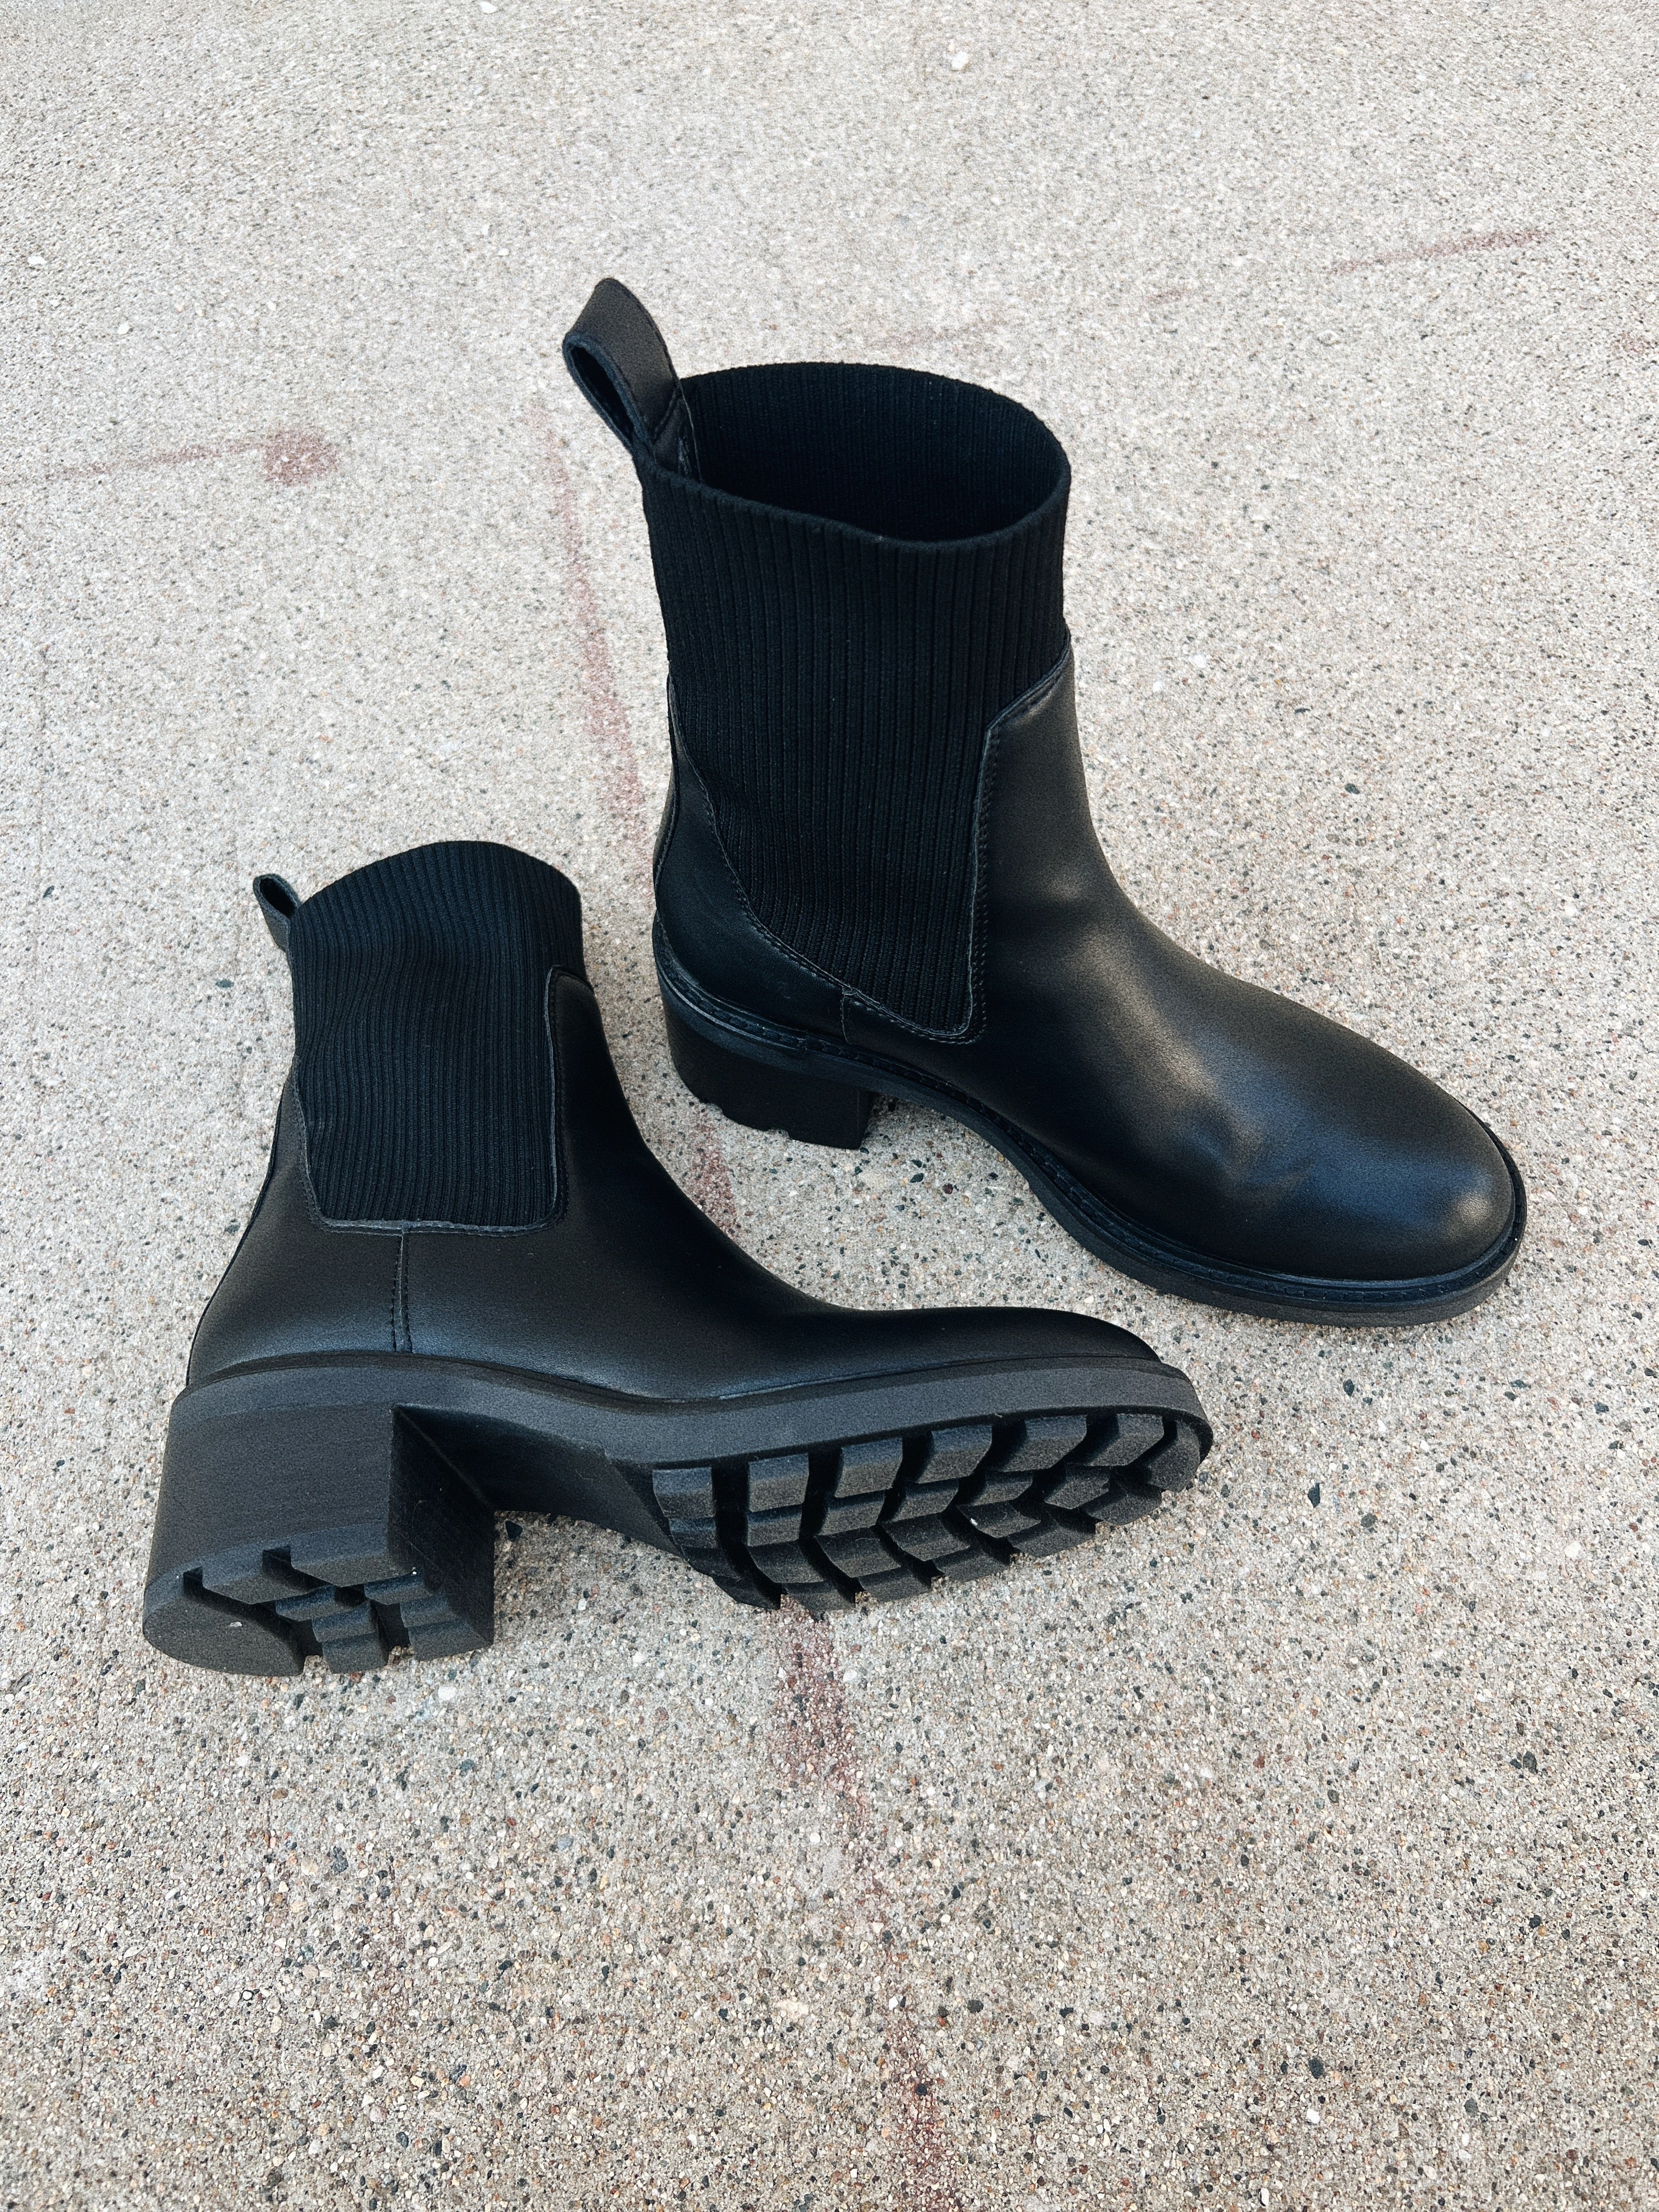 sm kiley boots